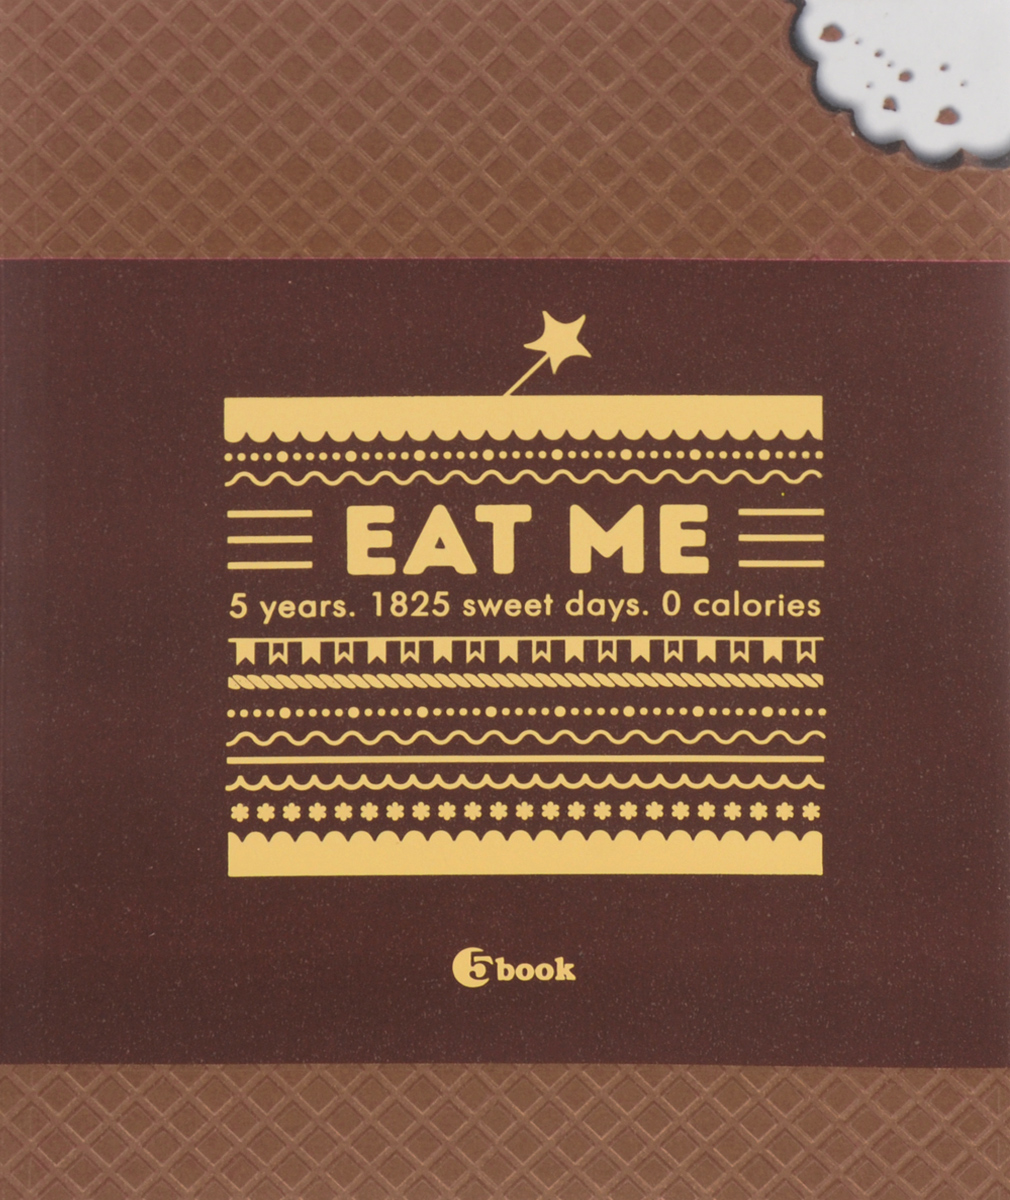 Eat Me. 5 years. 1825 sweet days. 0 calories